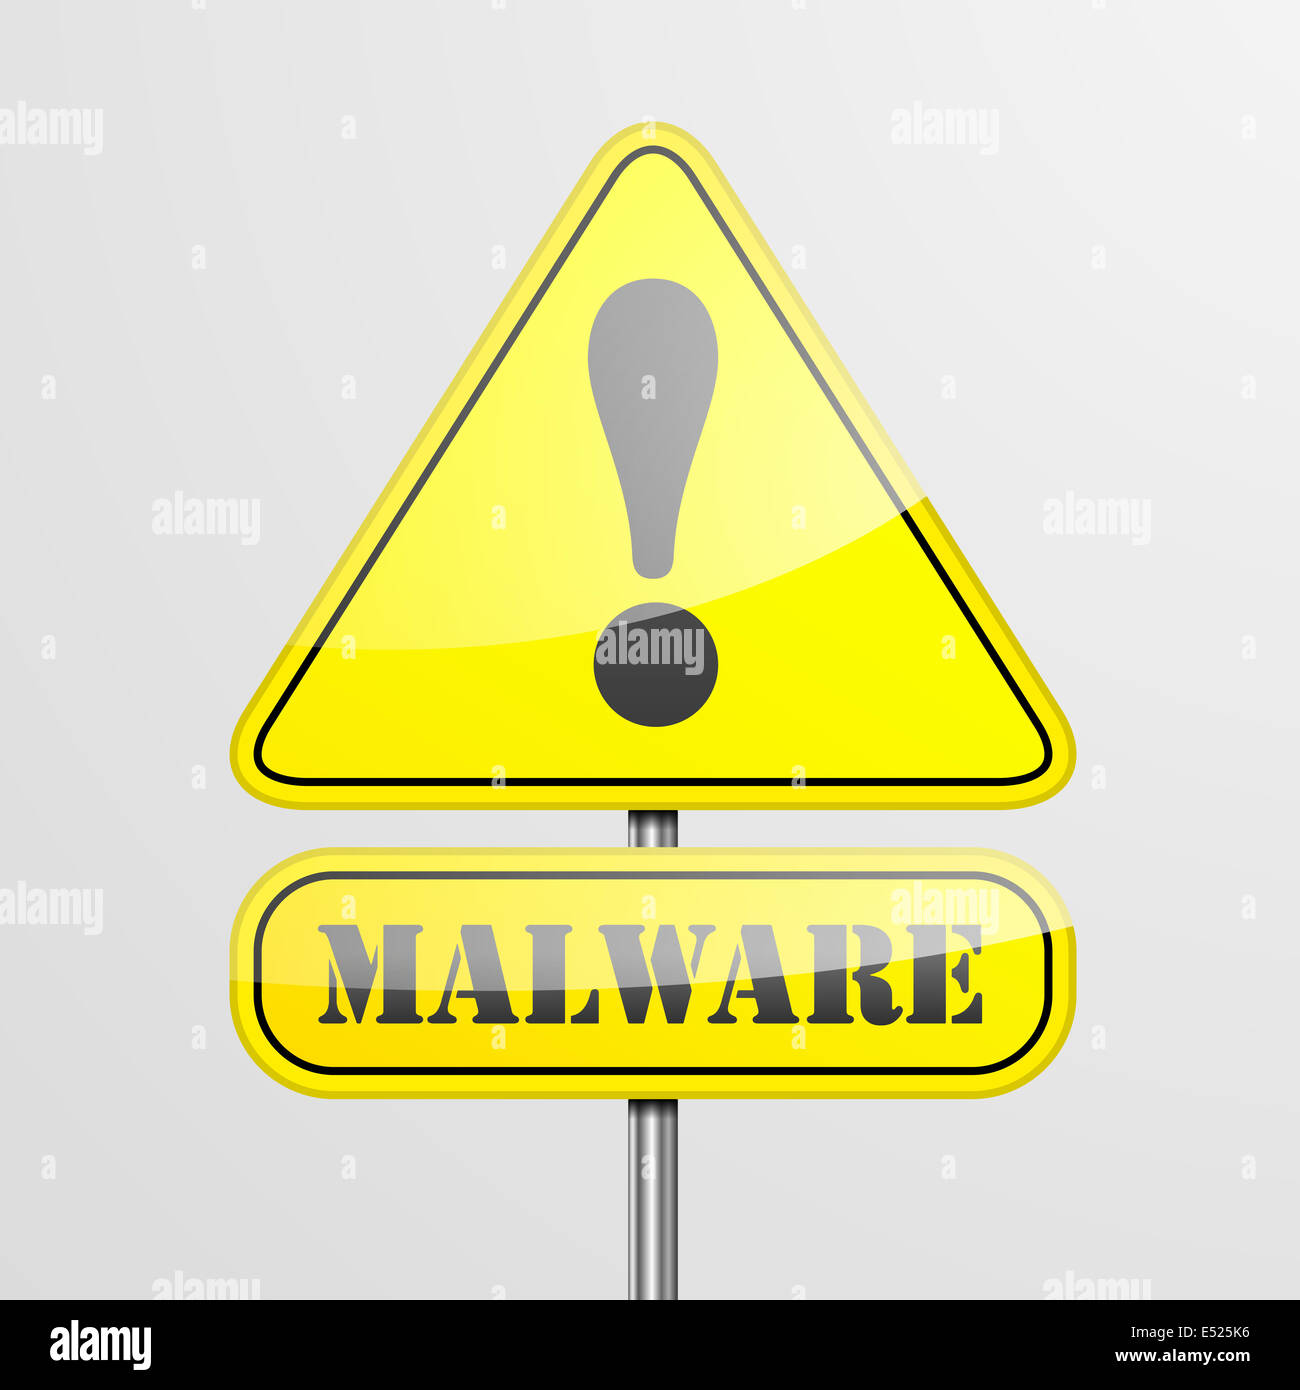 Malware RoadSign Banque D'Images